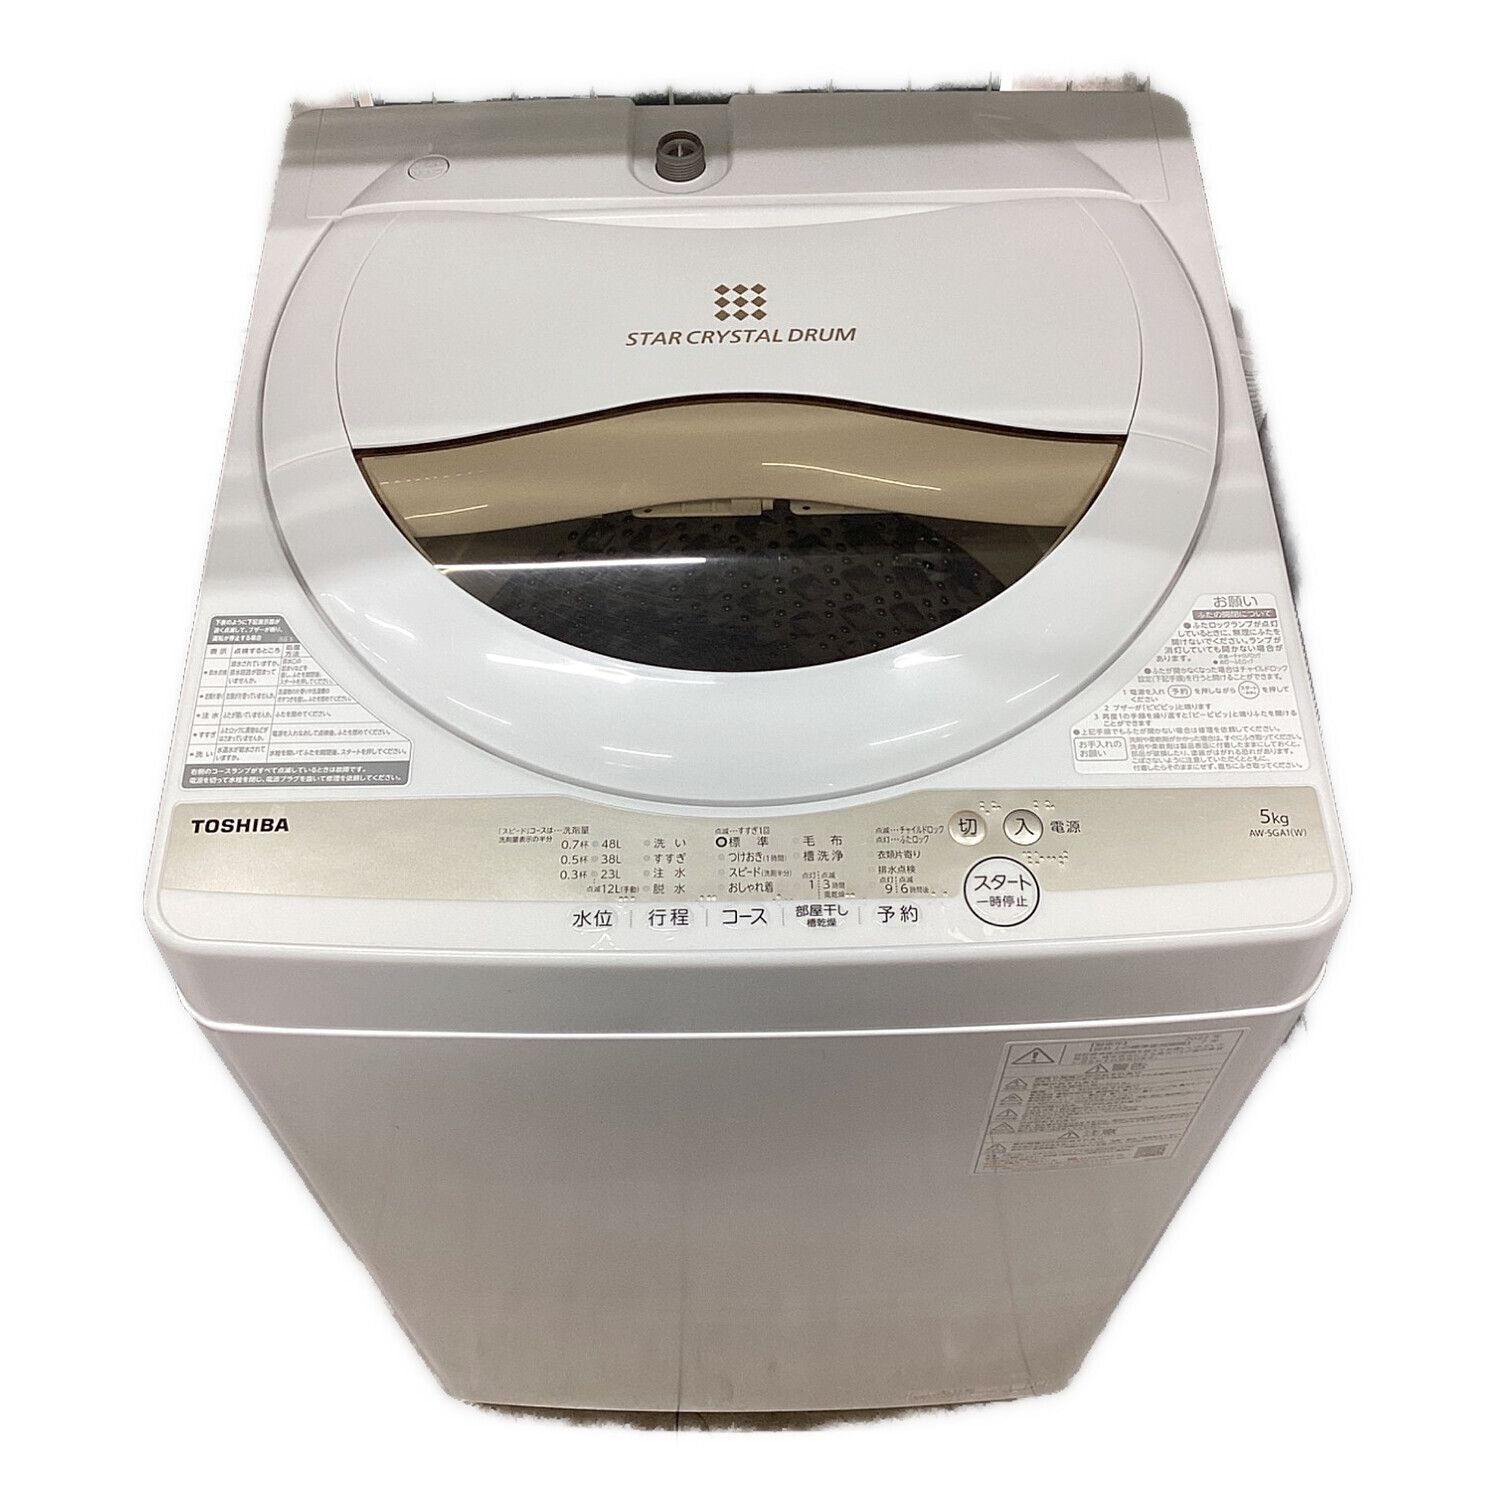 TOSHIBA 全自動洗濯機 2022 AW-5GA1 5kg写真のものが全てです